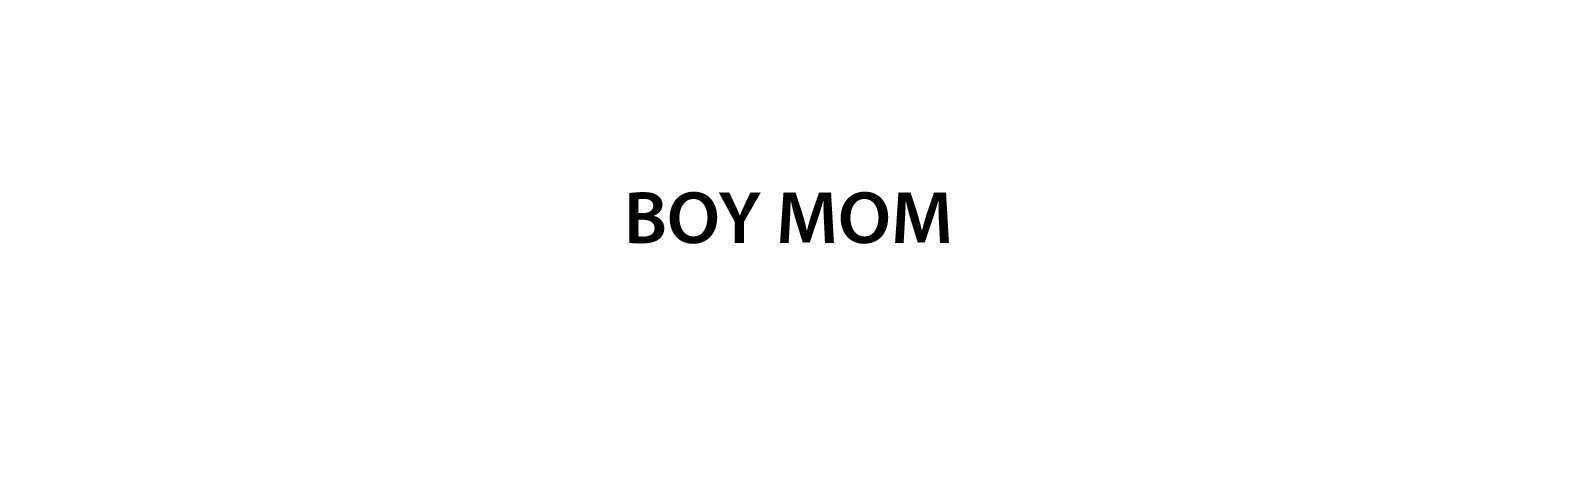 BOY MOM.jpg